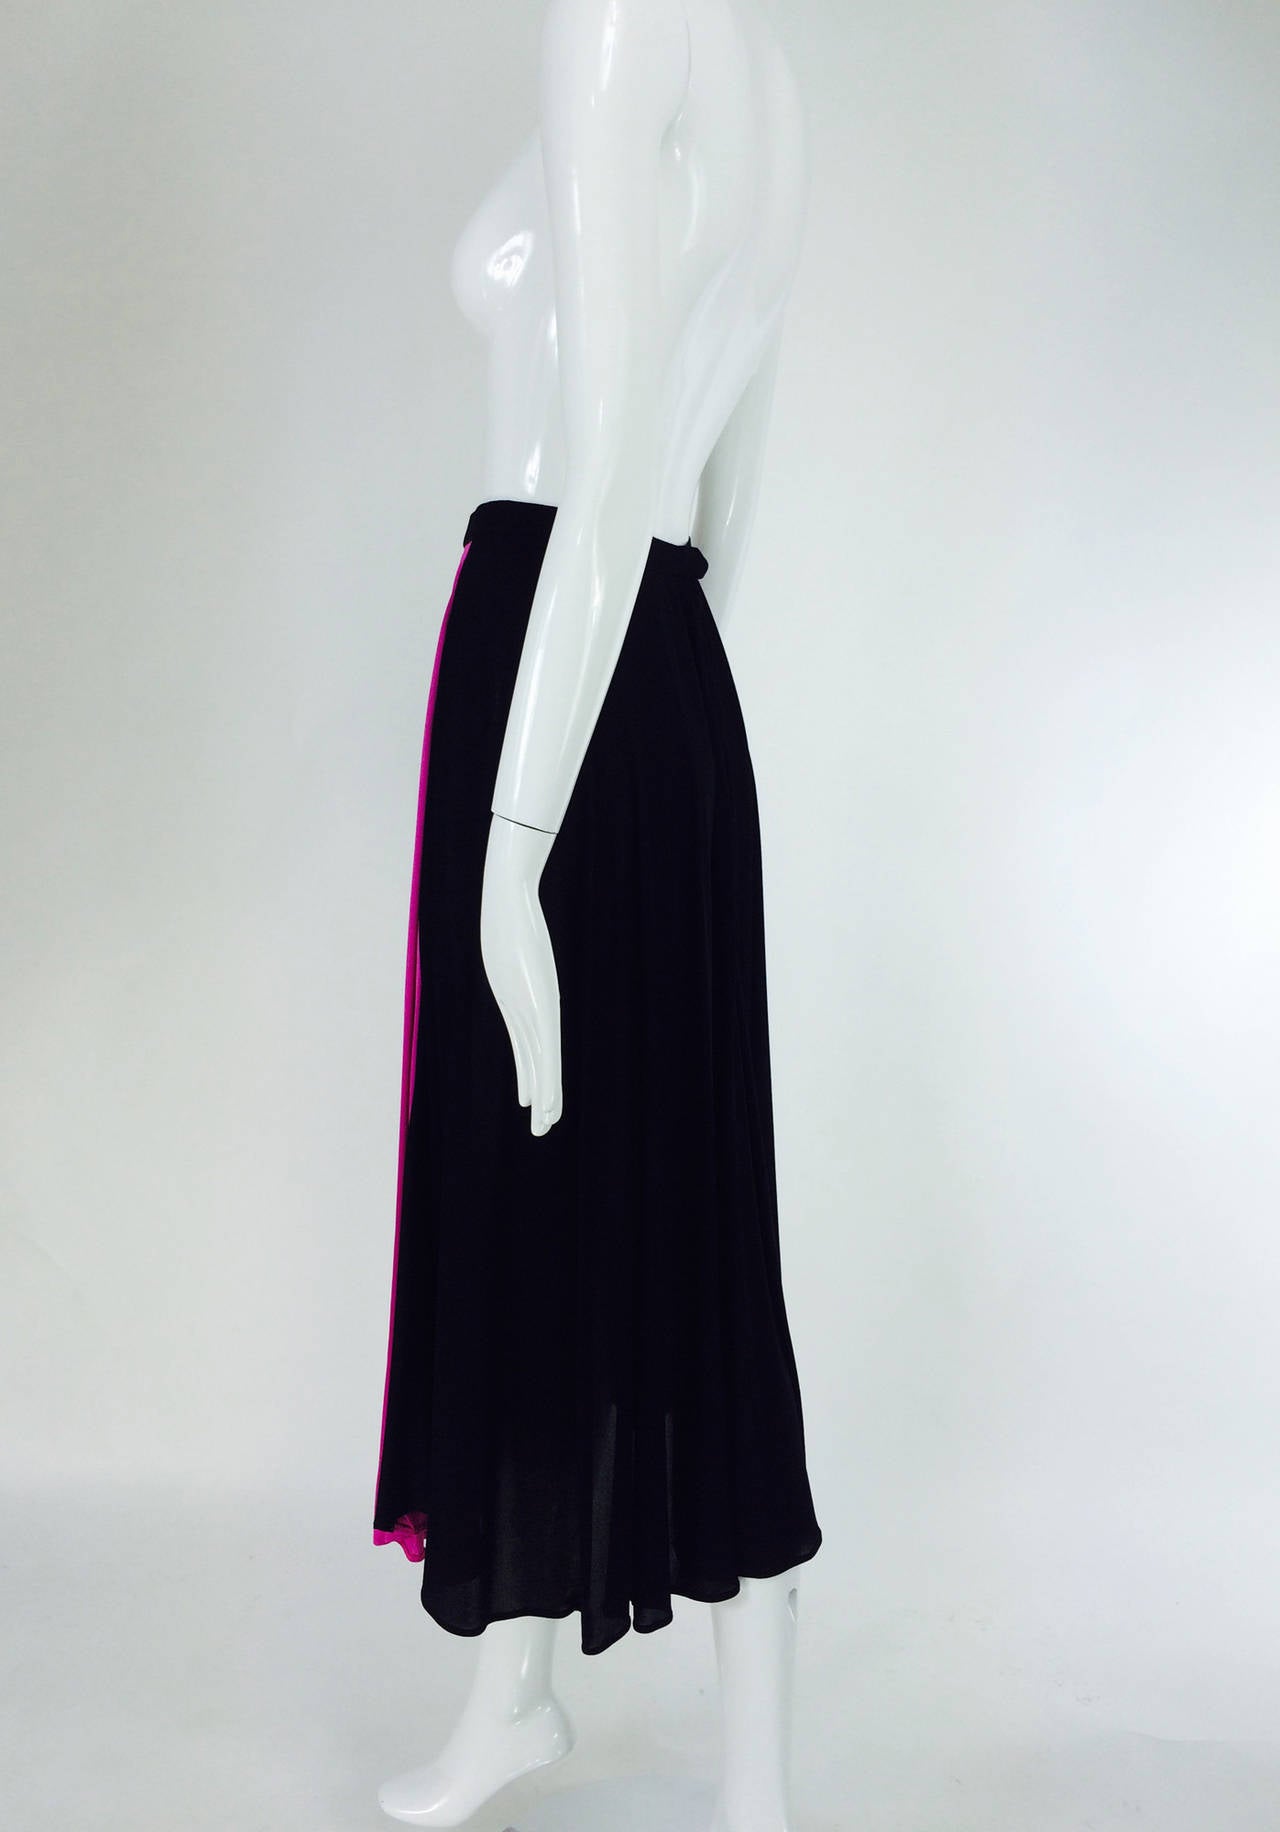 Purple Yves St Laurent YSL  Rive Gauche black & hot pink jersey skirt 1970s